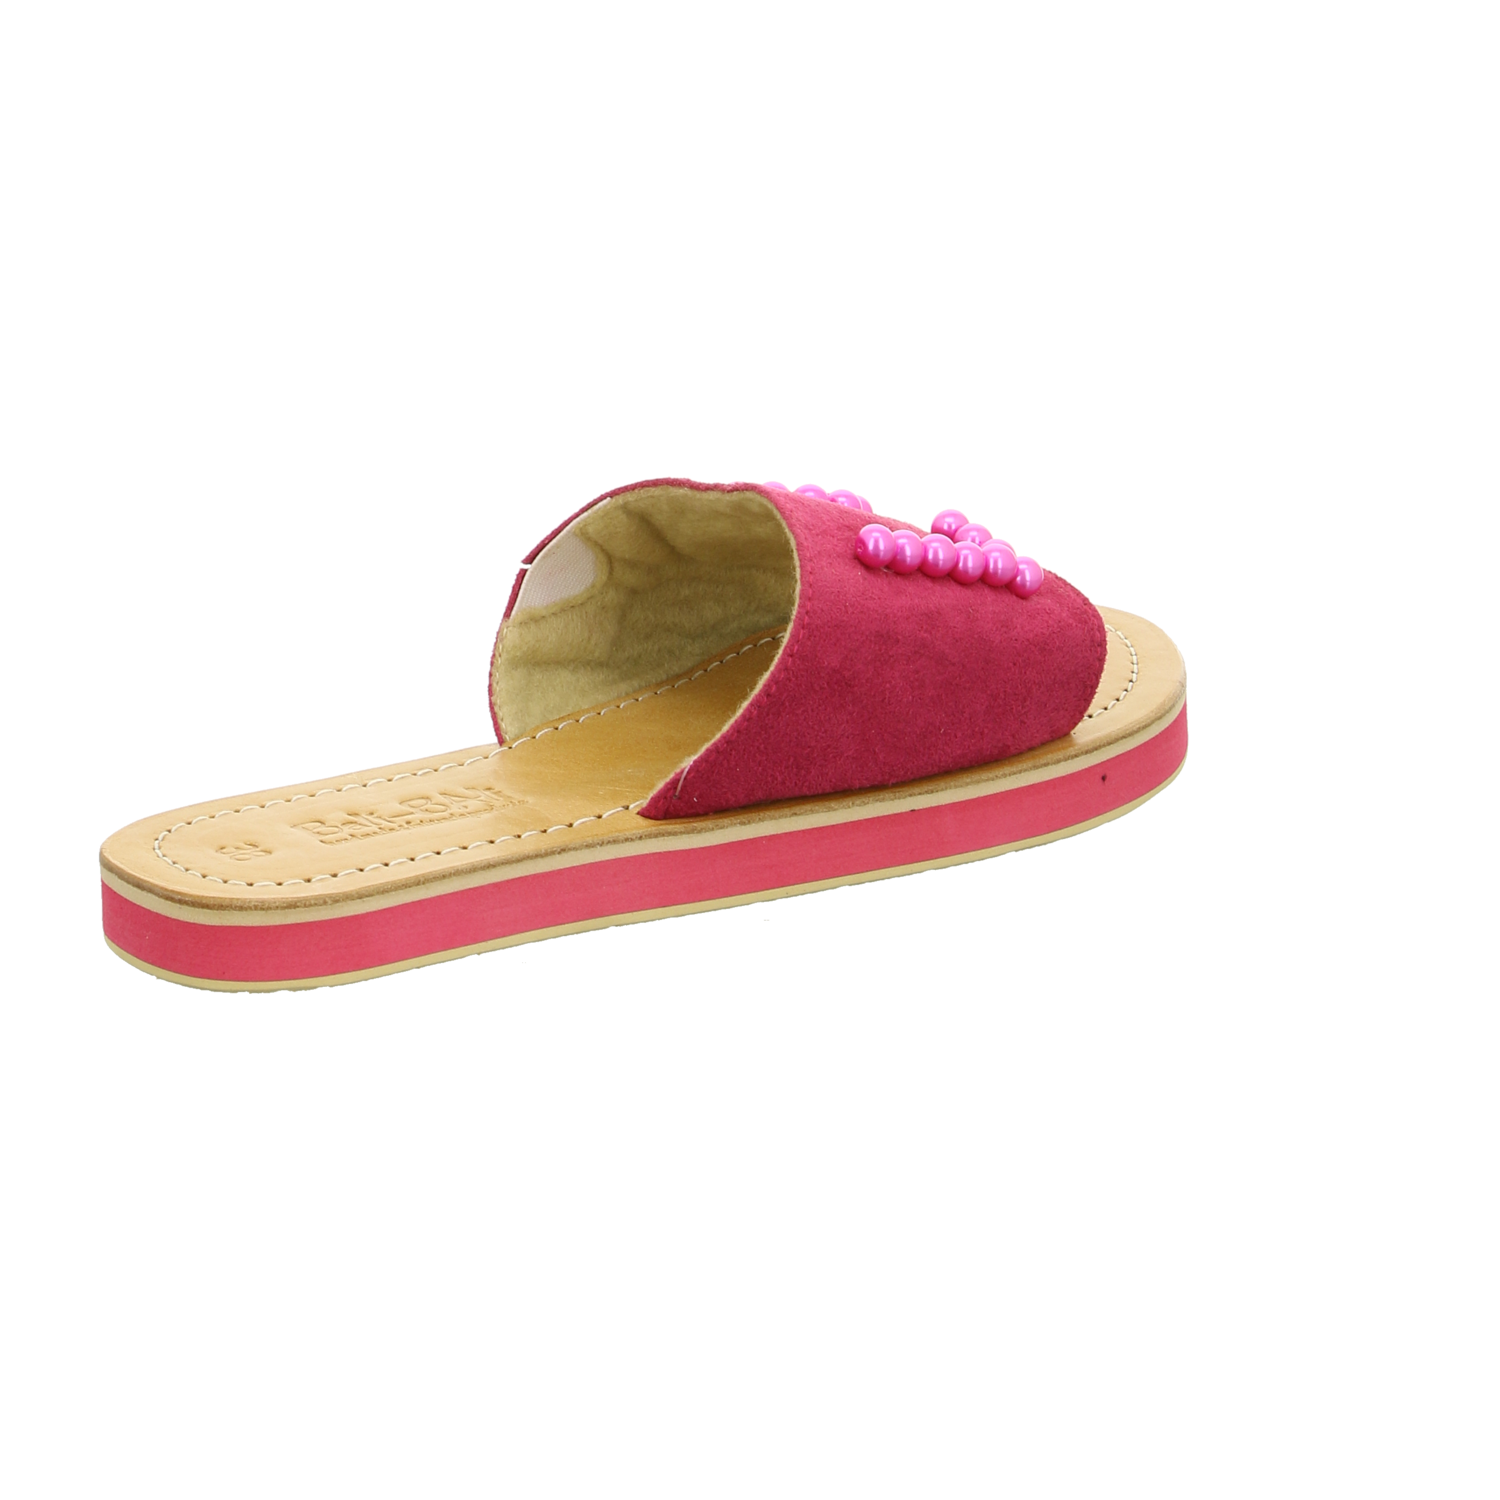 Bali Bali Sandalette bis 25 mm pink / fuchsia